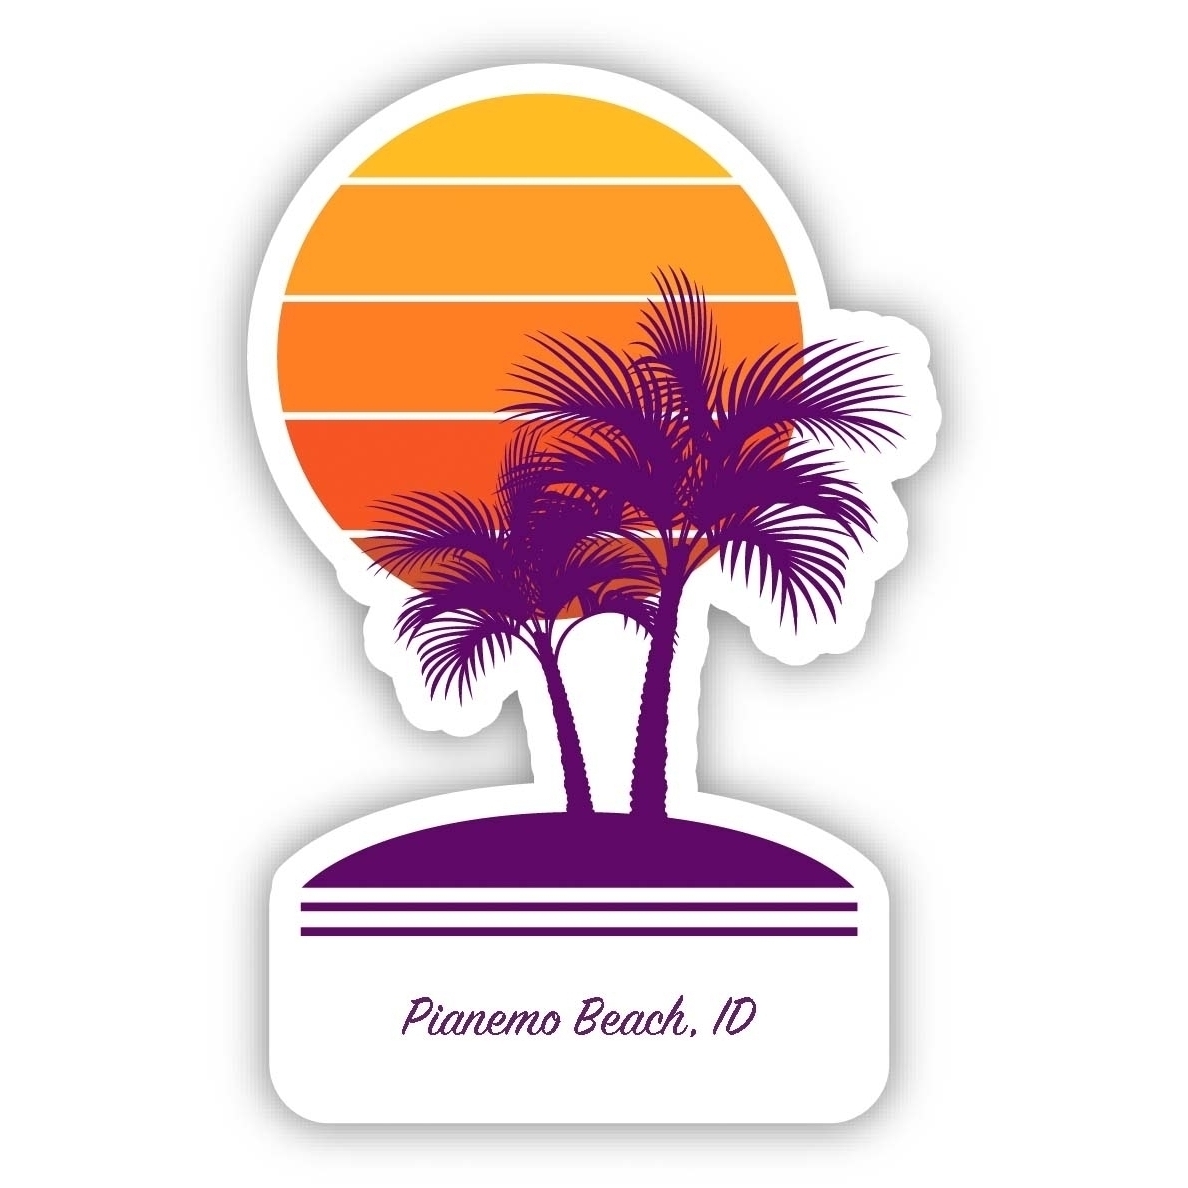 Pianemo Beach Indonesia Souvenir 4 Inch Vinyl Decal Sticker Palm Design